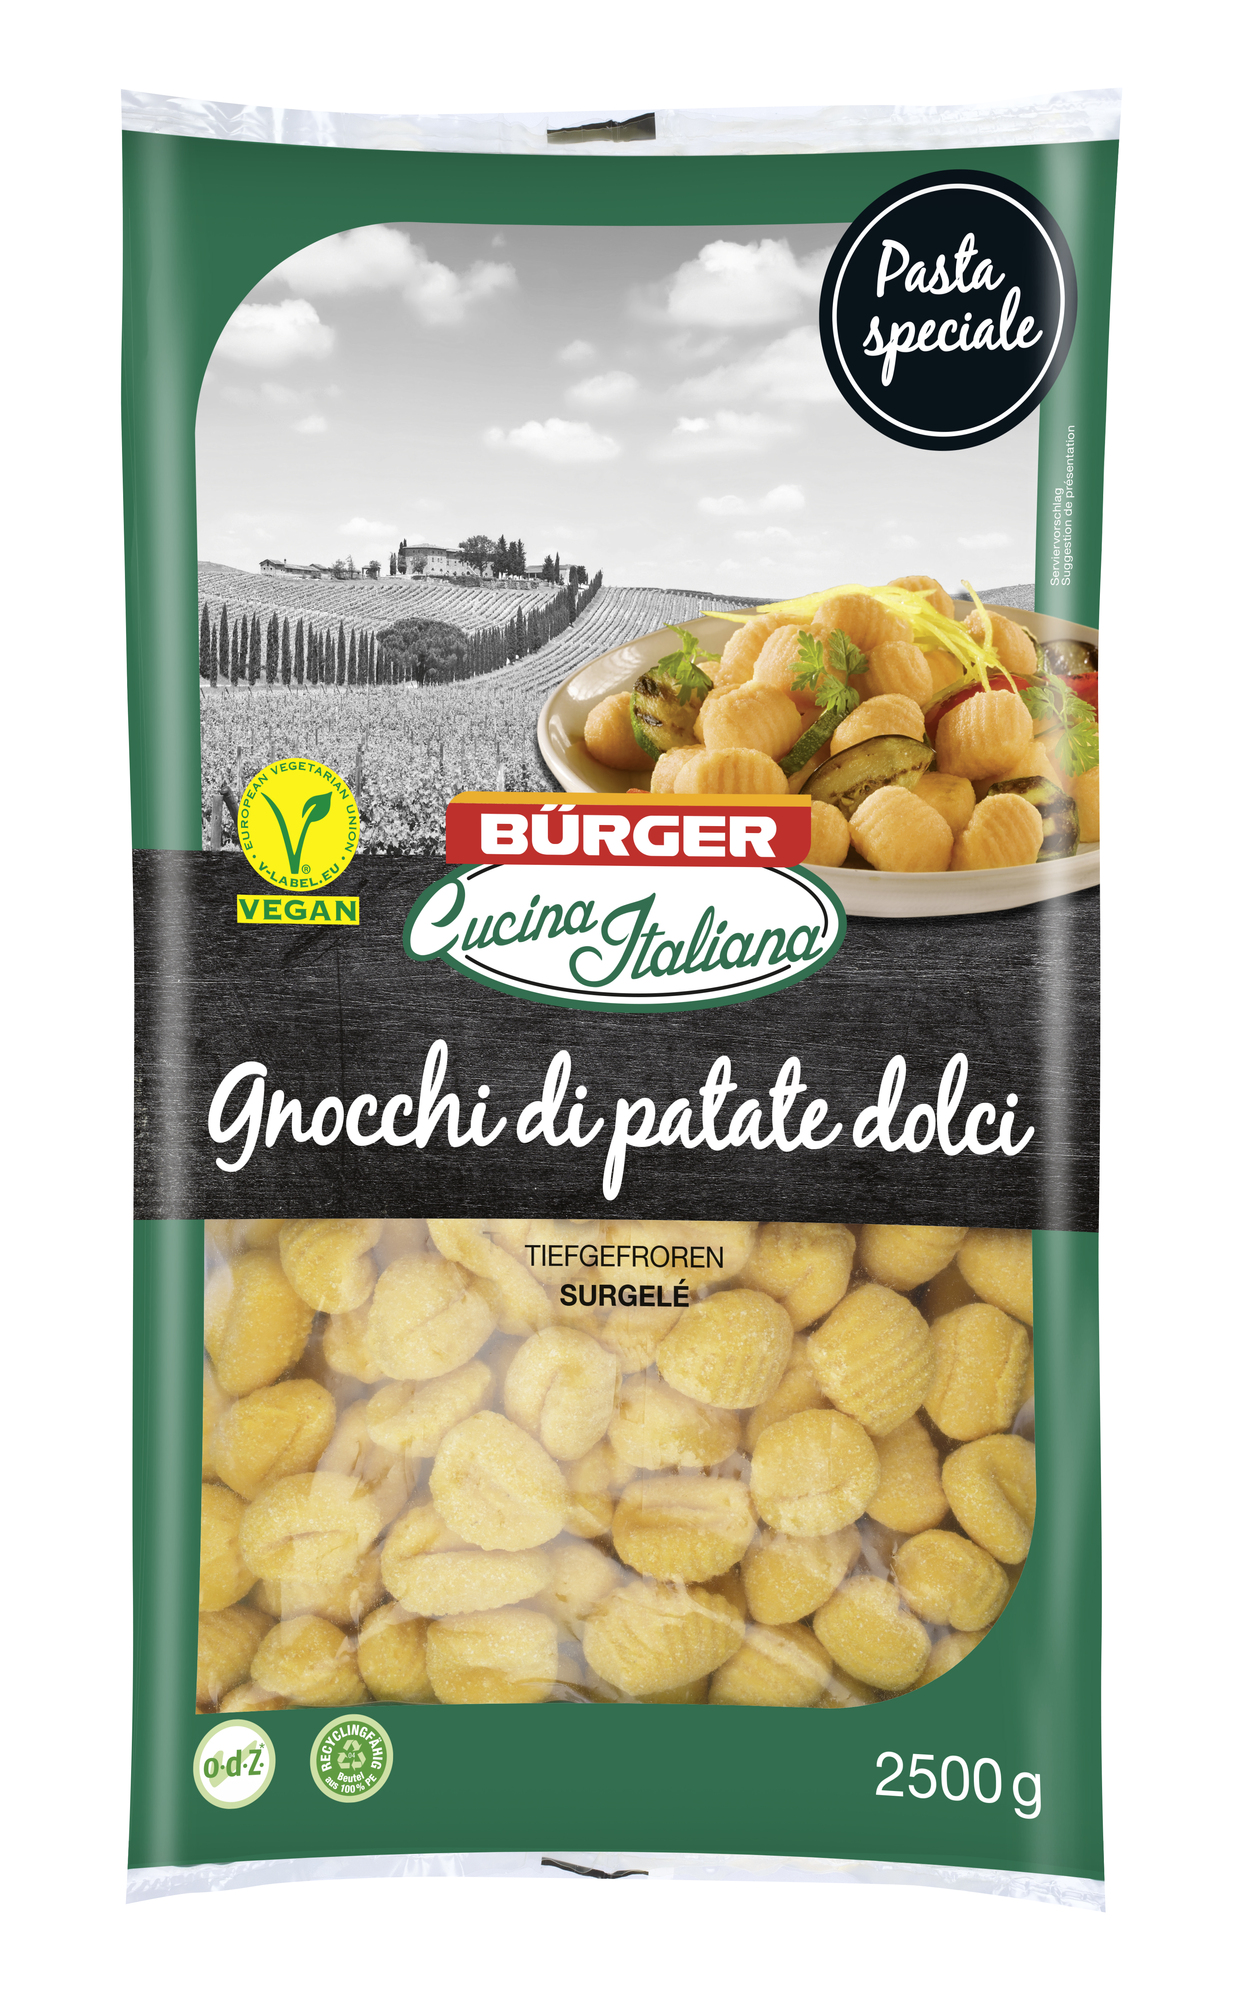 Gnocchi di patata polci (mit Süßkartoffel) 2500g